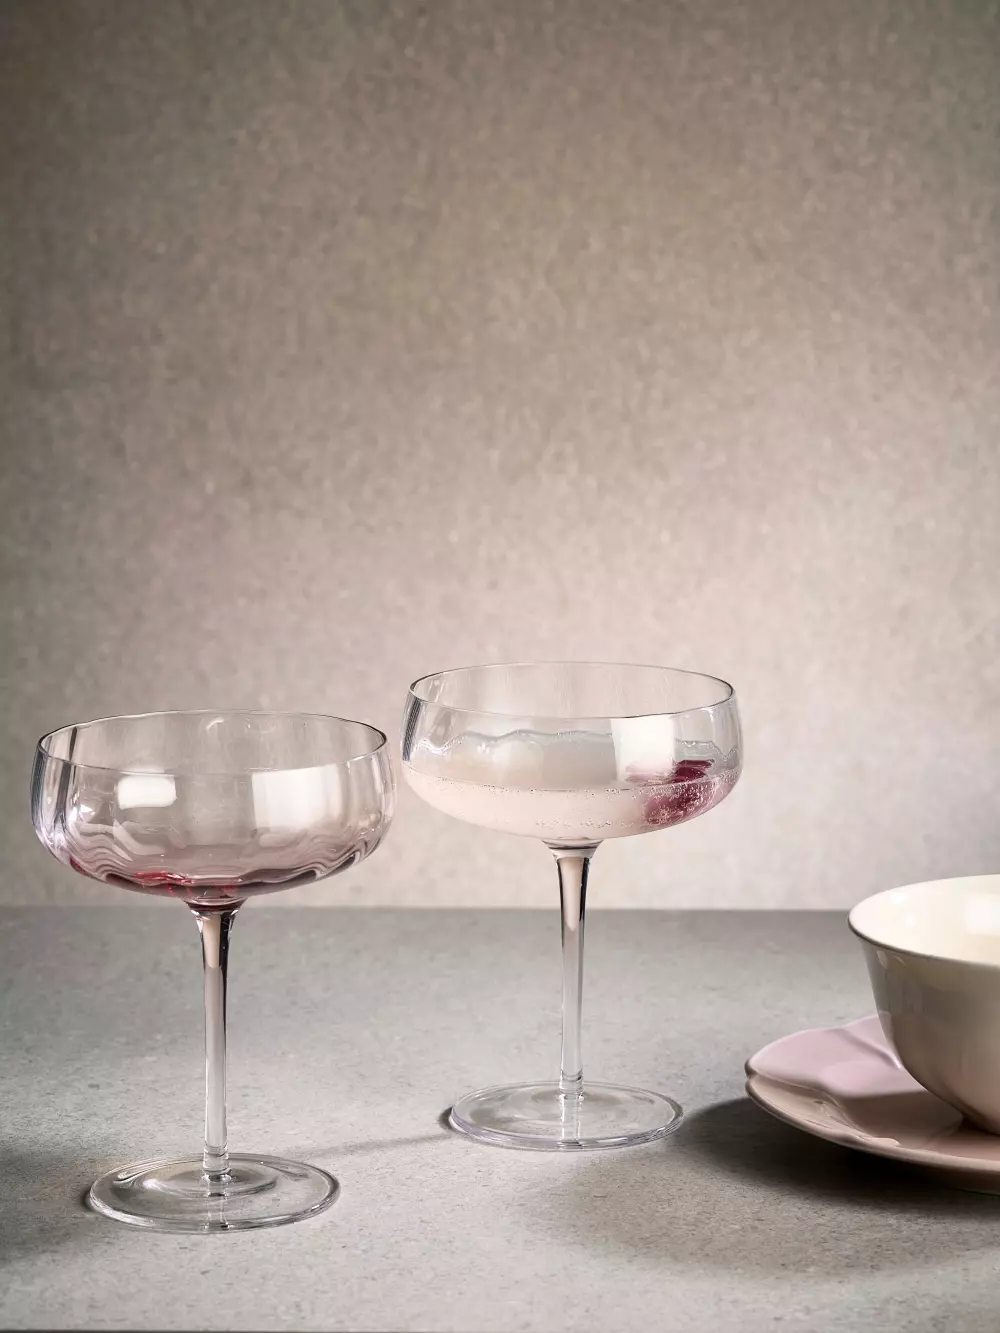 Søholm Sonja Champagneglass Soft Pink, 5709554164514, 16451, Kjøkken, Glass, Søholm, Aida, SØHOLM Sonja – champagne glass Soft pink 1 pcs 30 cl